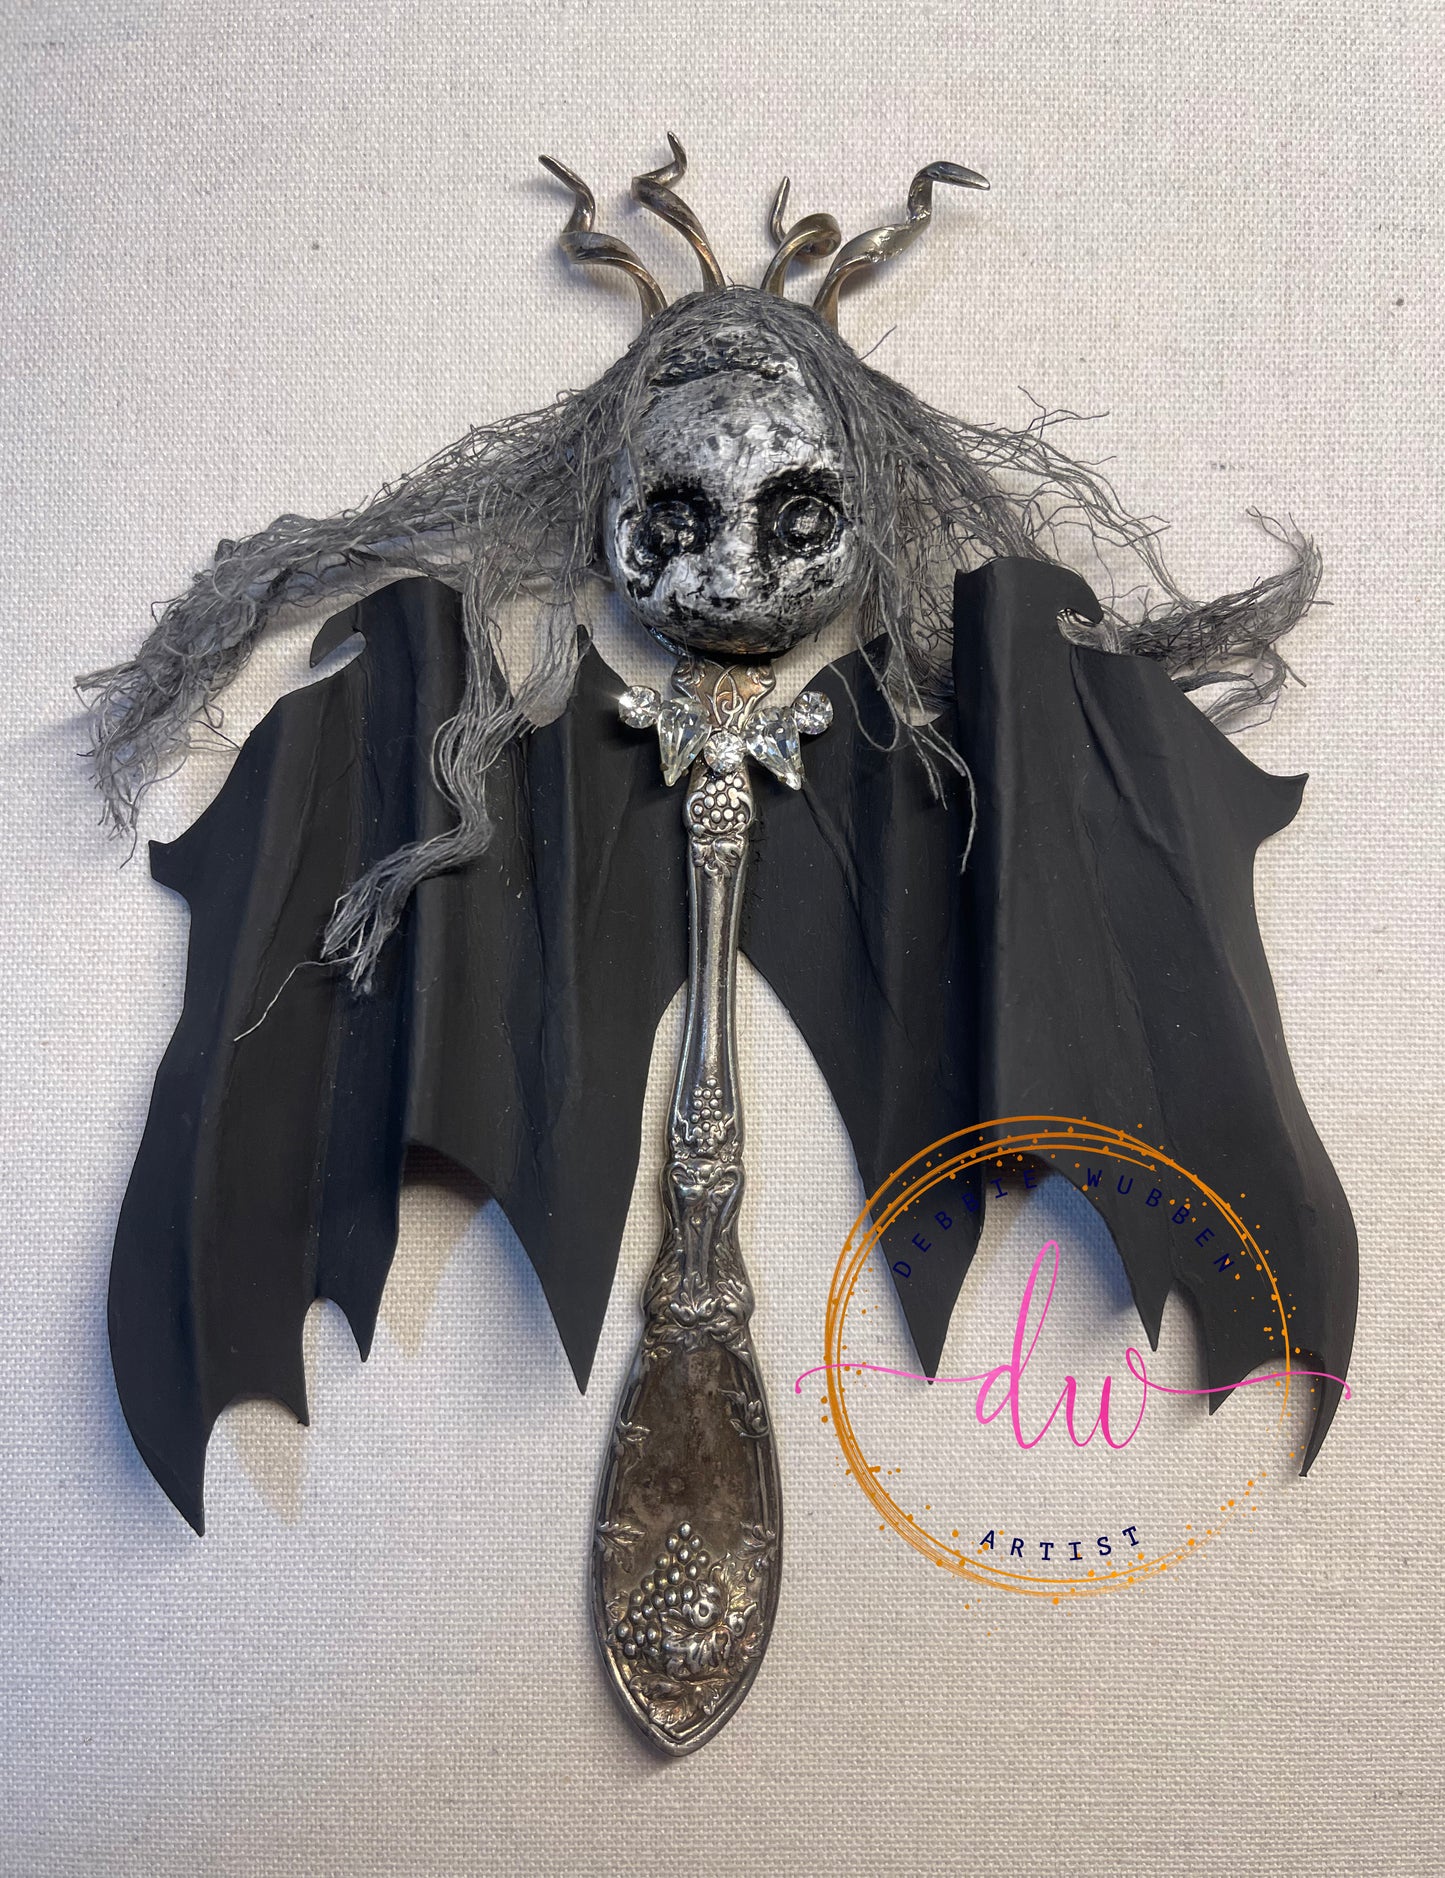 SOLD**"Lilibat" bat-creature 2 vintage silver